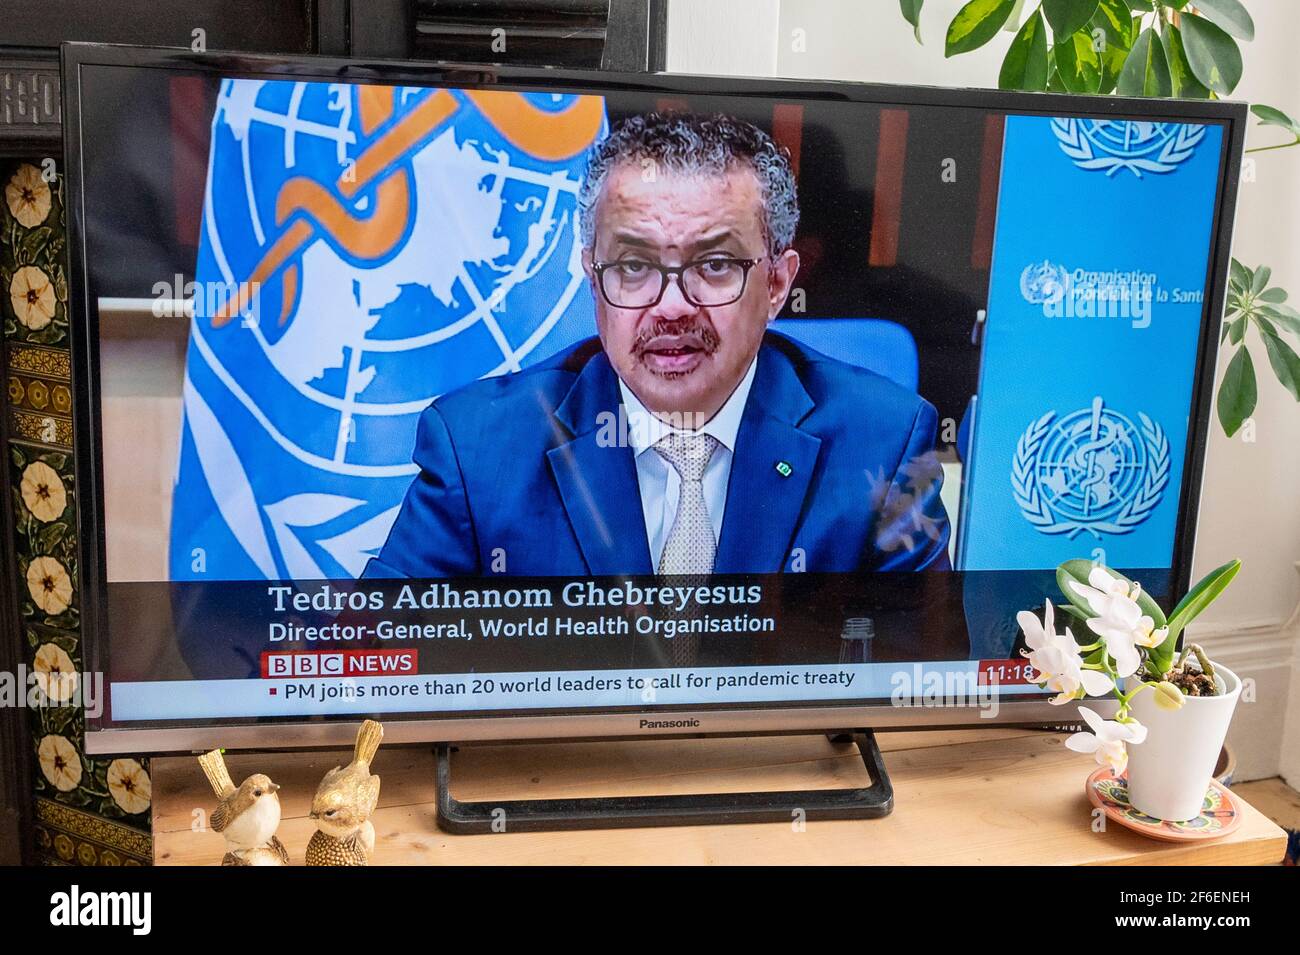 Director General of the World Health Organisation, Tedros Adhanom Ghebreyesus being interview on BBC news regarding the Coronavirus pandemic. Stock Photo